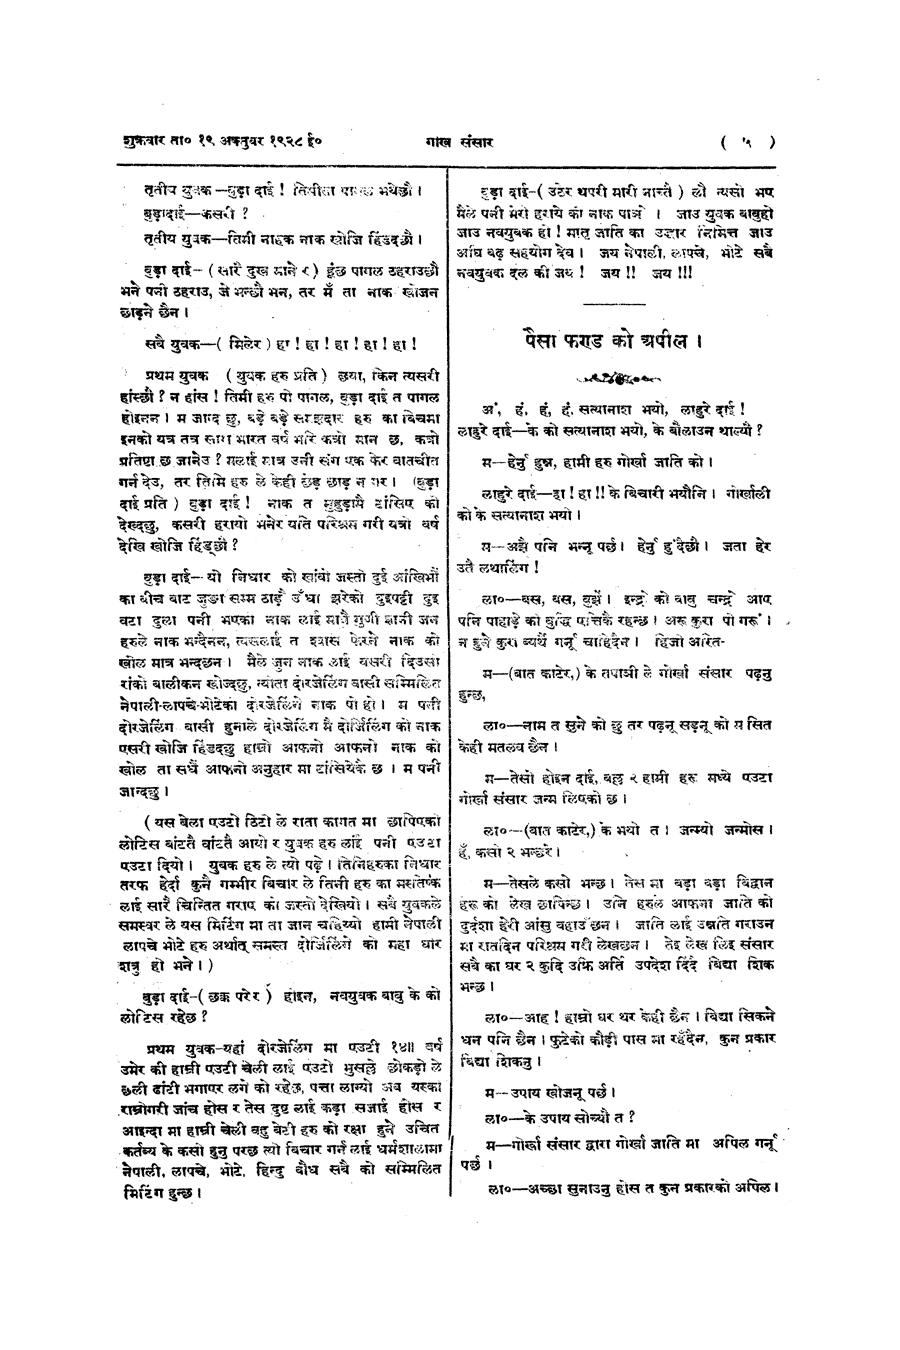 Gorkha Sansar, 19 Oct 1928, page 5